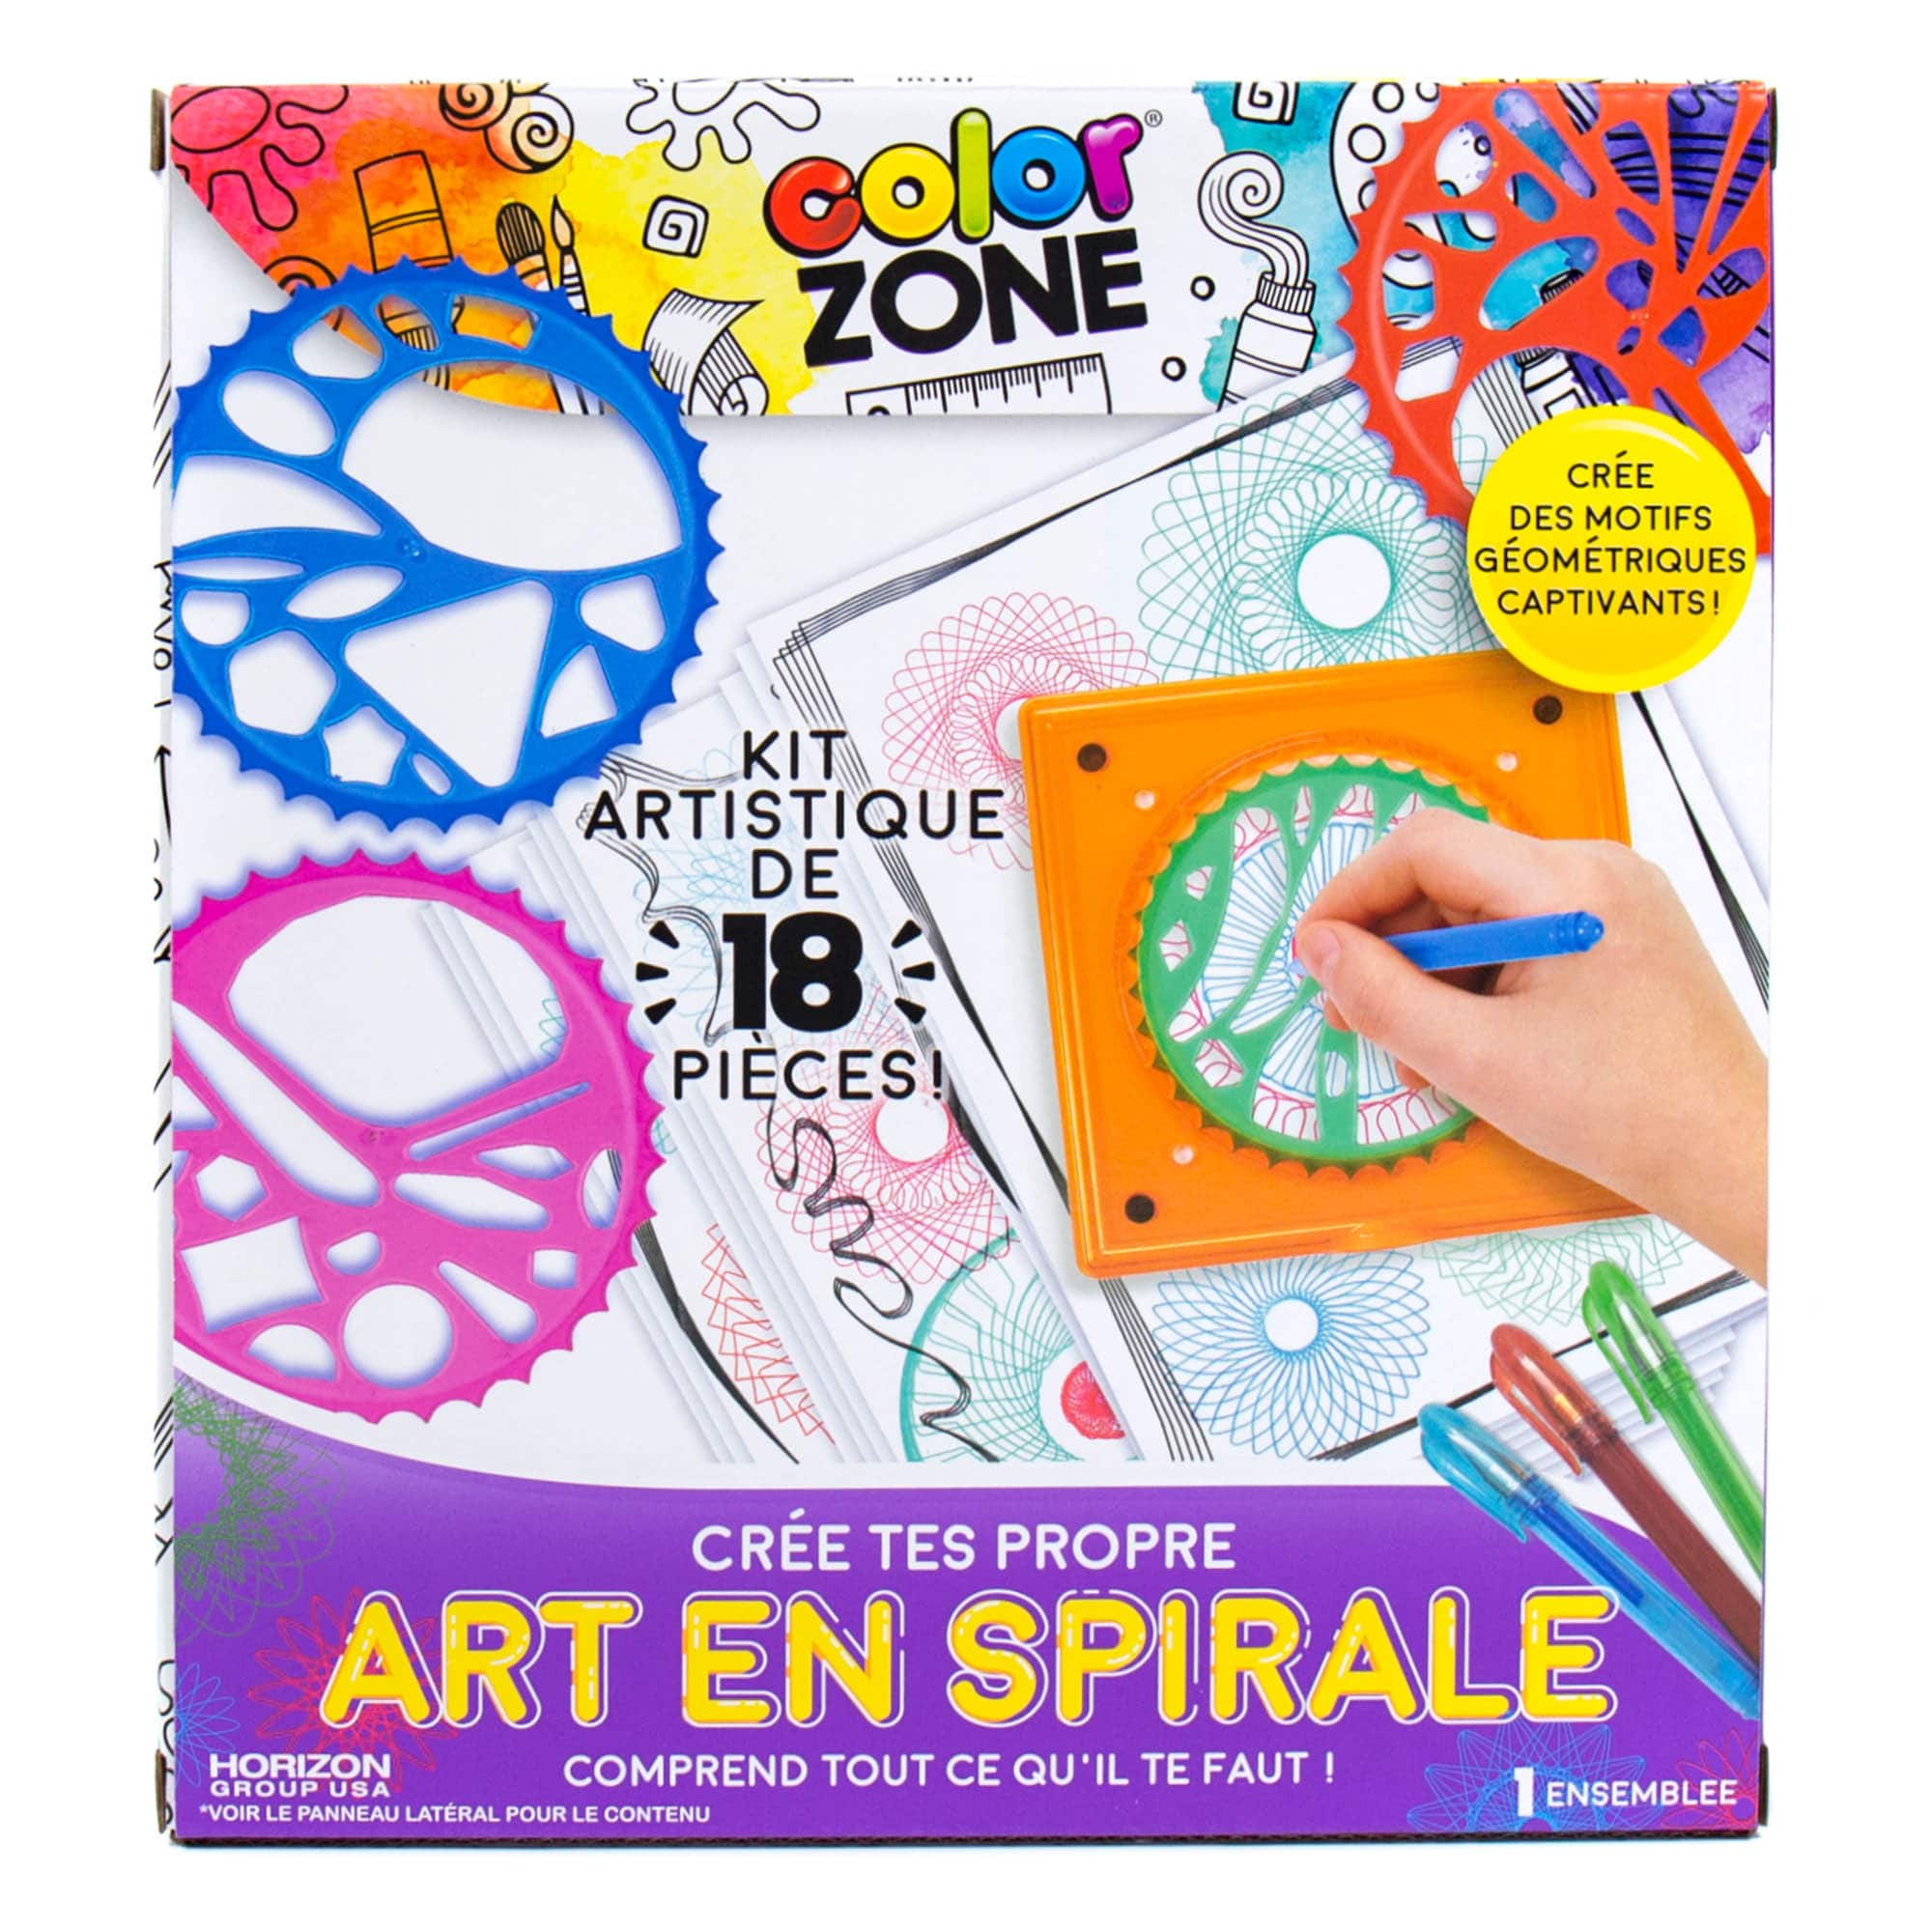 Awesome Spiral Art Kits for Kids - Spiral Art Center